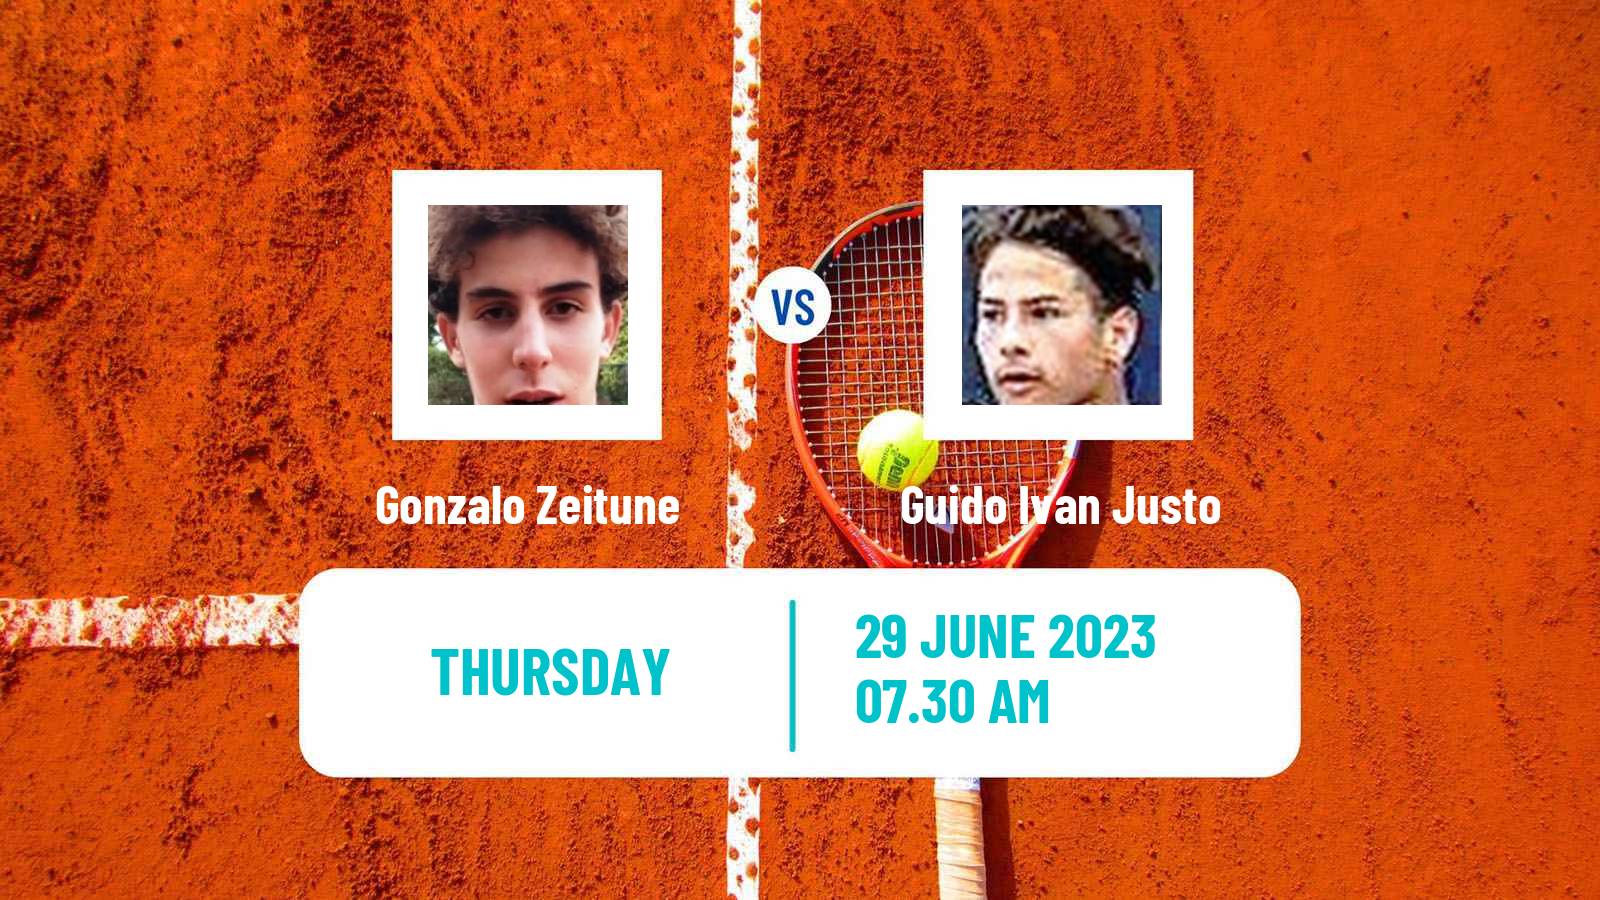 Tennis ITF M25 Rosario Santa Fe Men Gonzalo Zeitune - Guido Ivan Justo